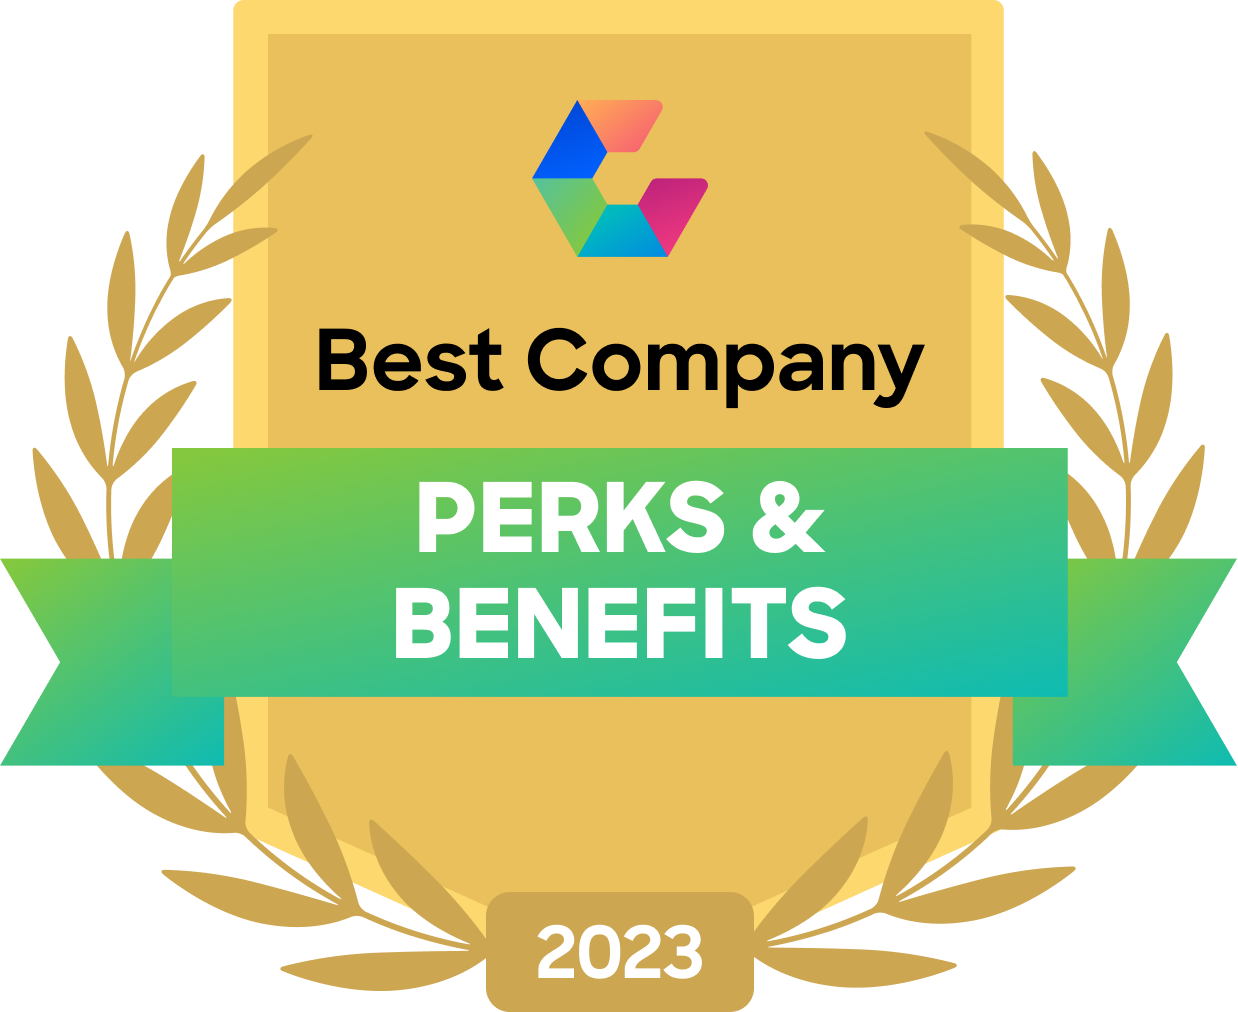 Best company perks and benefits award 2023